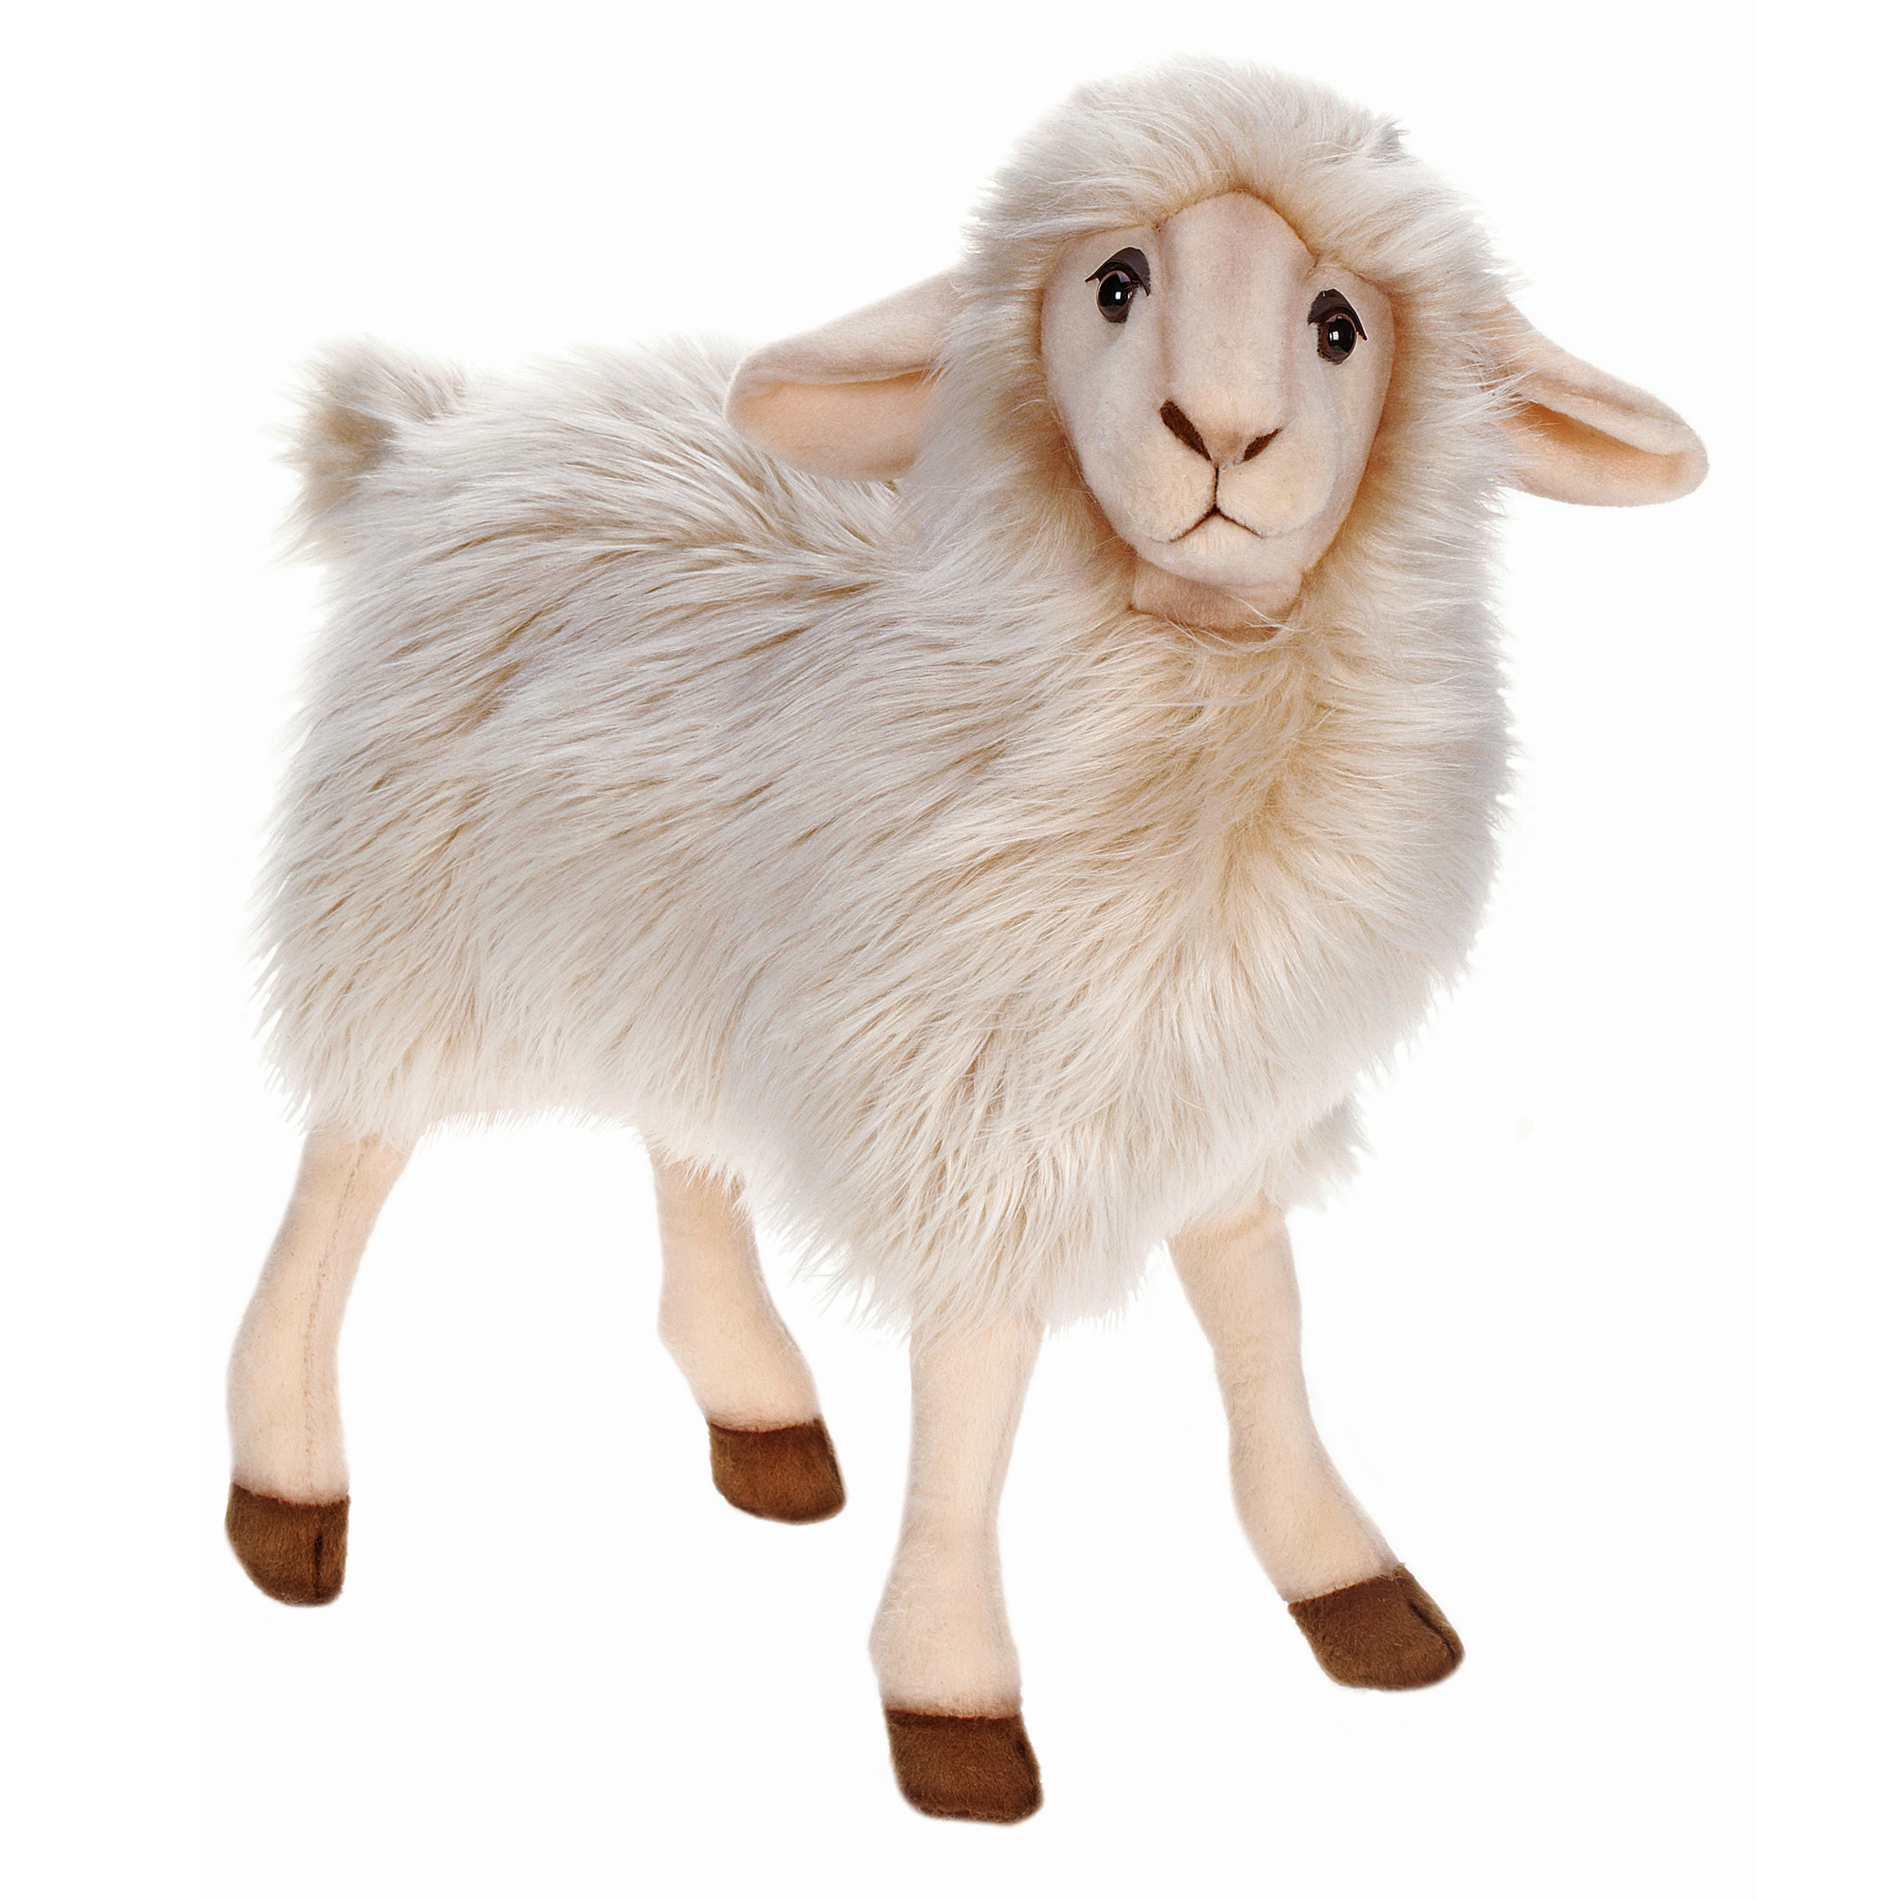 Hansa Creation 16-inch White Mama Sheep Stuffed Animal